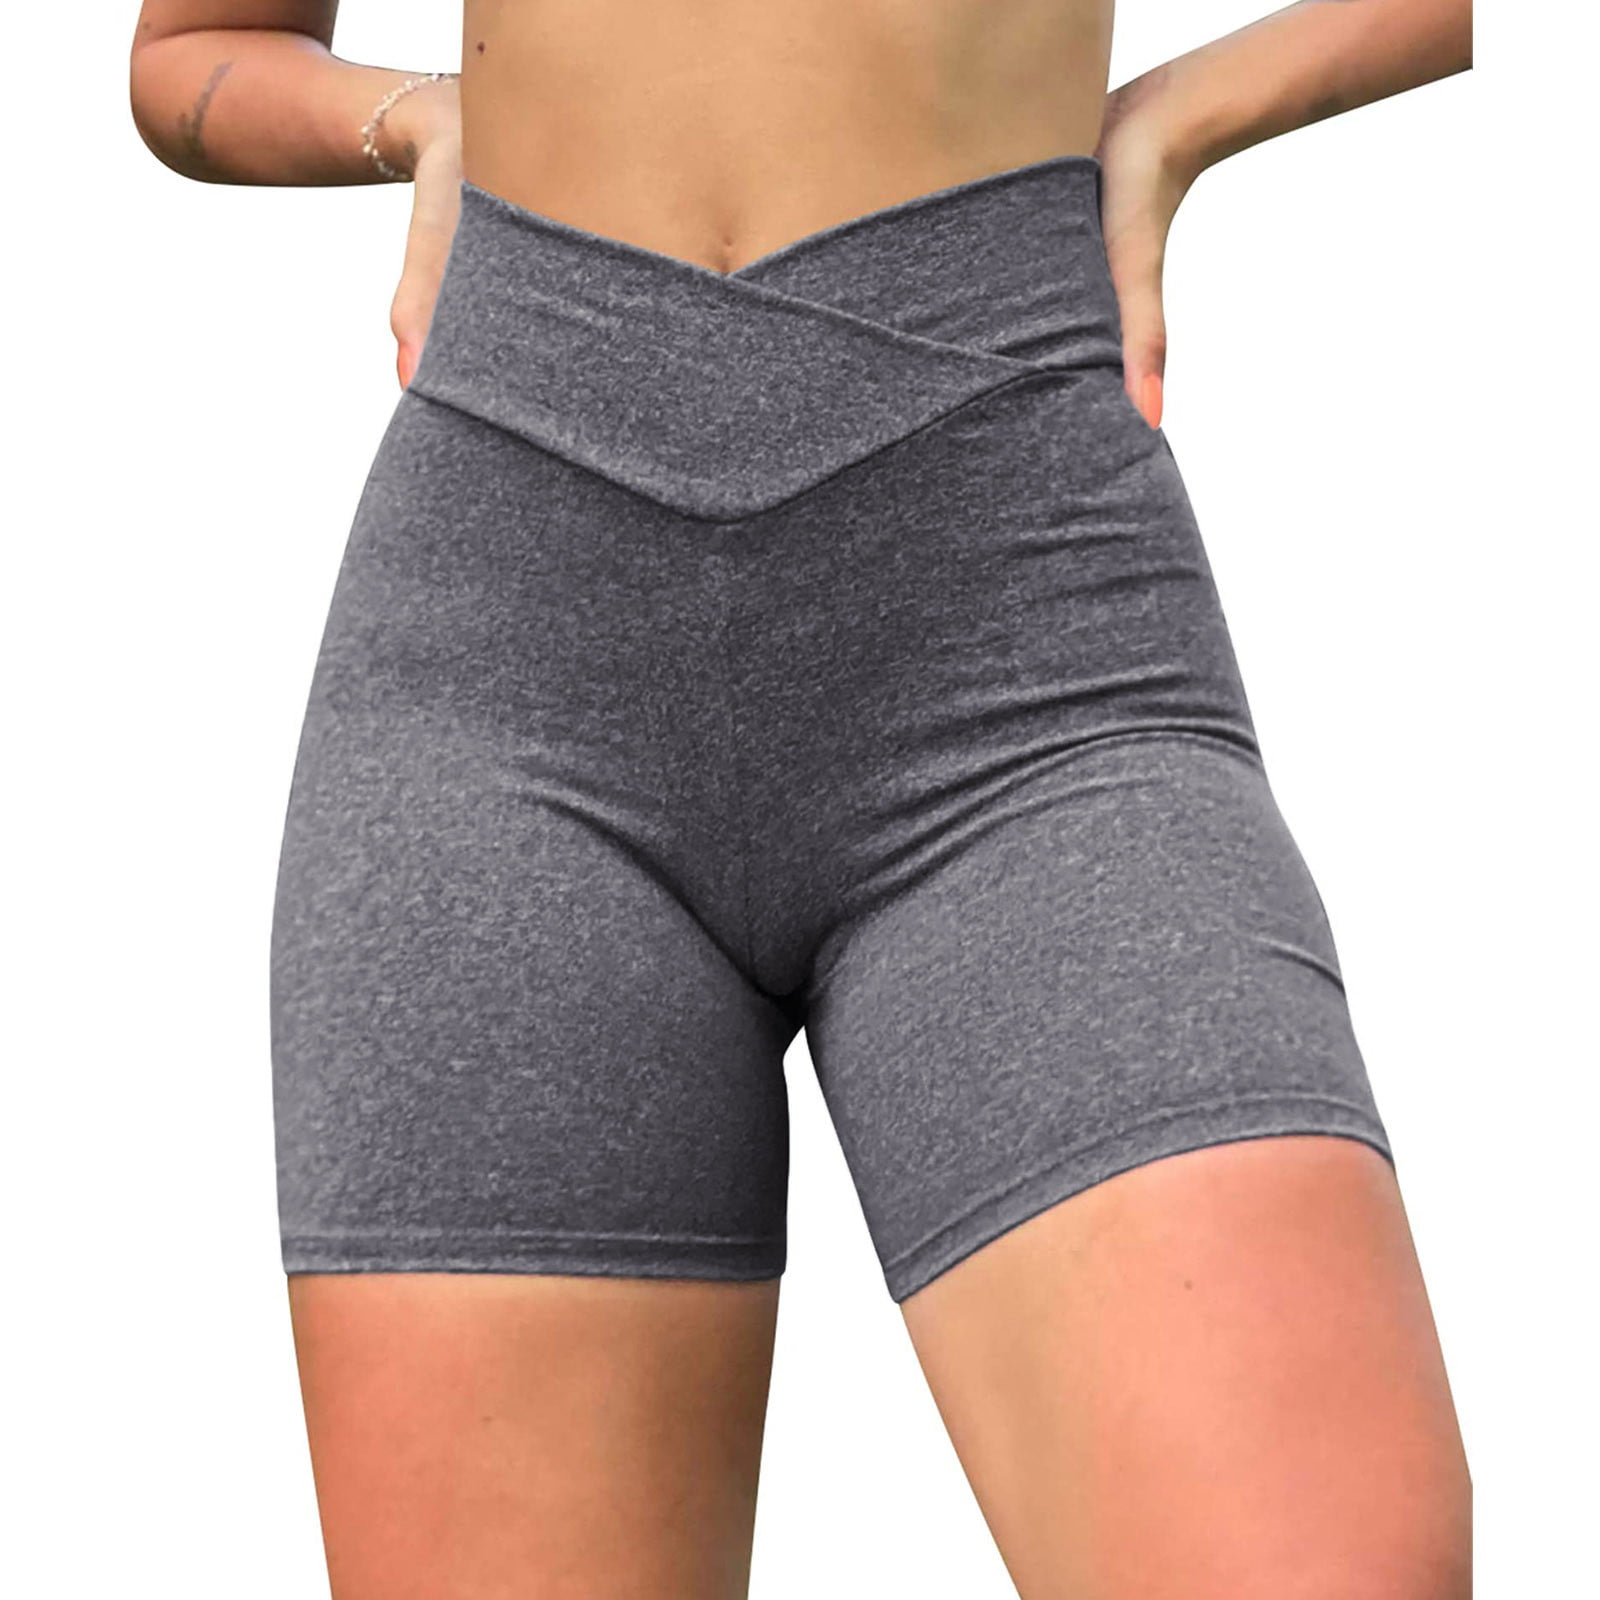 kpoplk Workout Shorts Womens,Women's Yoga Short Tummy Control Workout  Running Athletic Non See-Through Yoga Shorts with Hidden Pocket(Grey,XL) -  Walmart.com